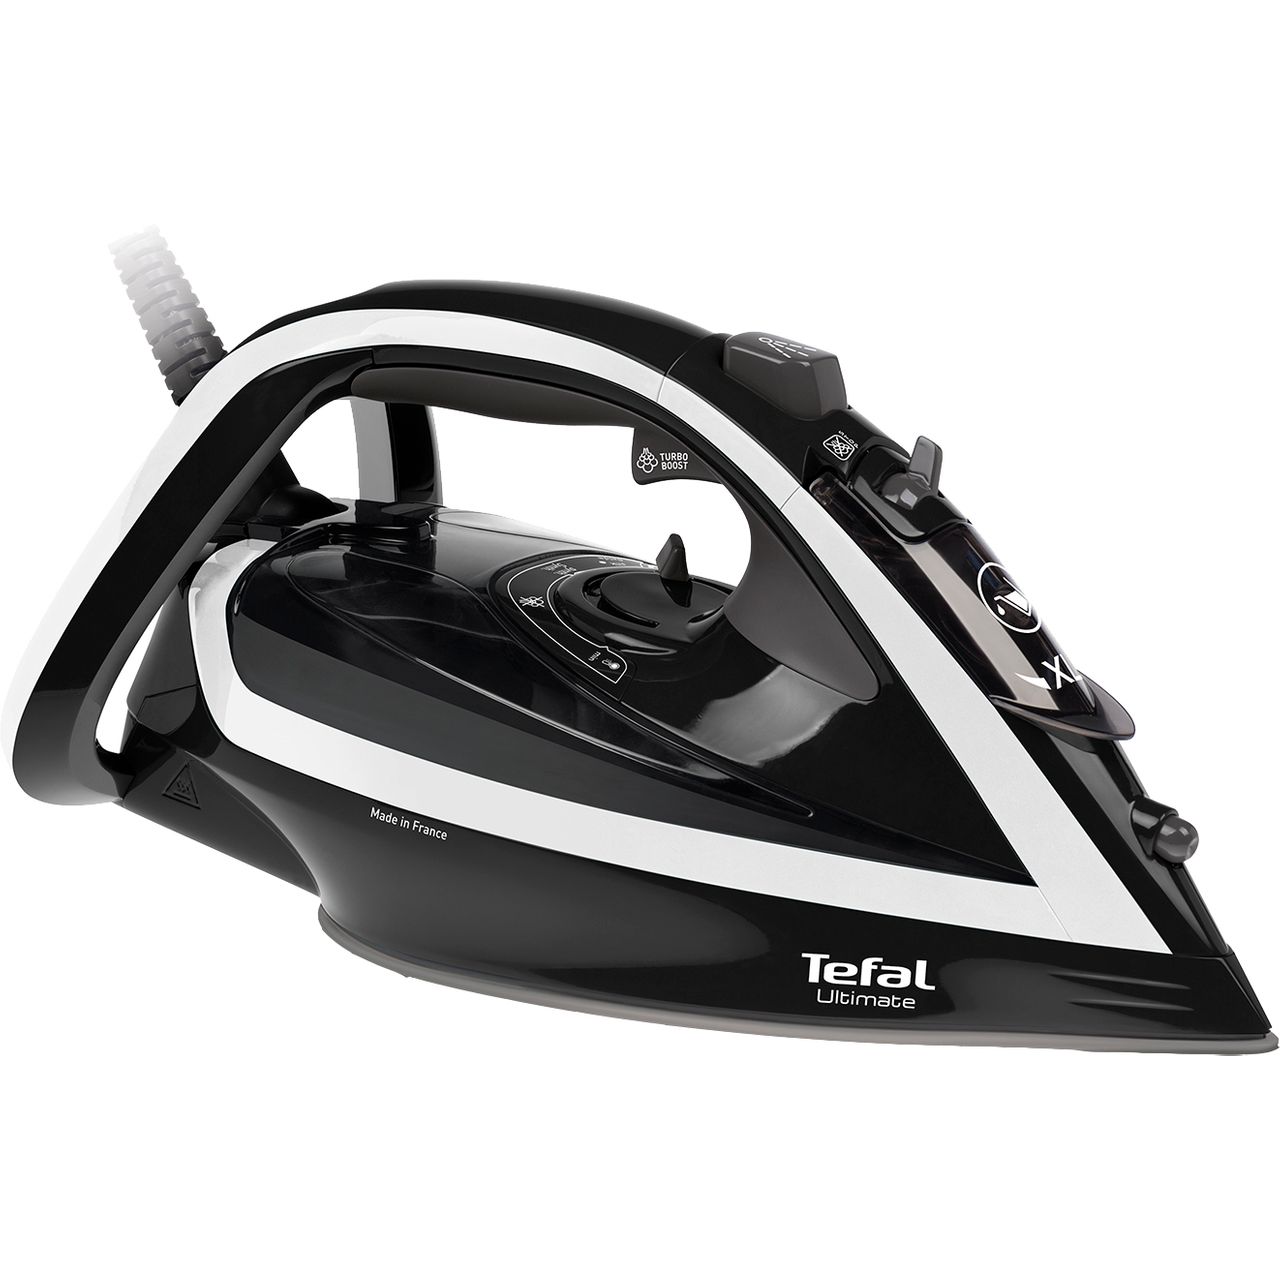 Tefal Ultimate Turbo Pro FV5675 2800 Watt Iron -Black / White Review